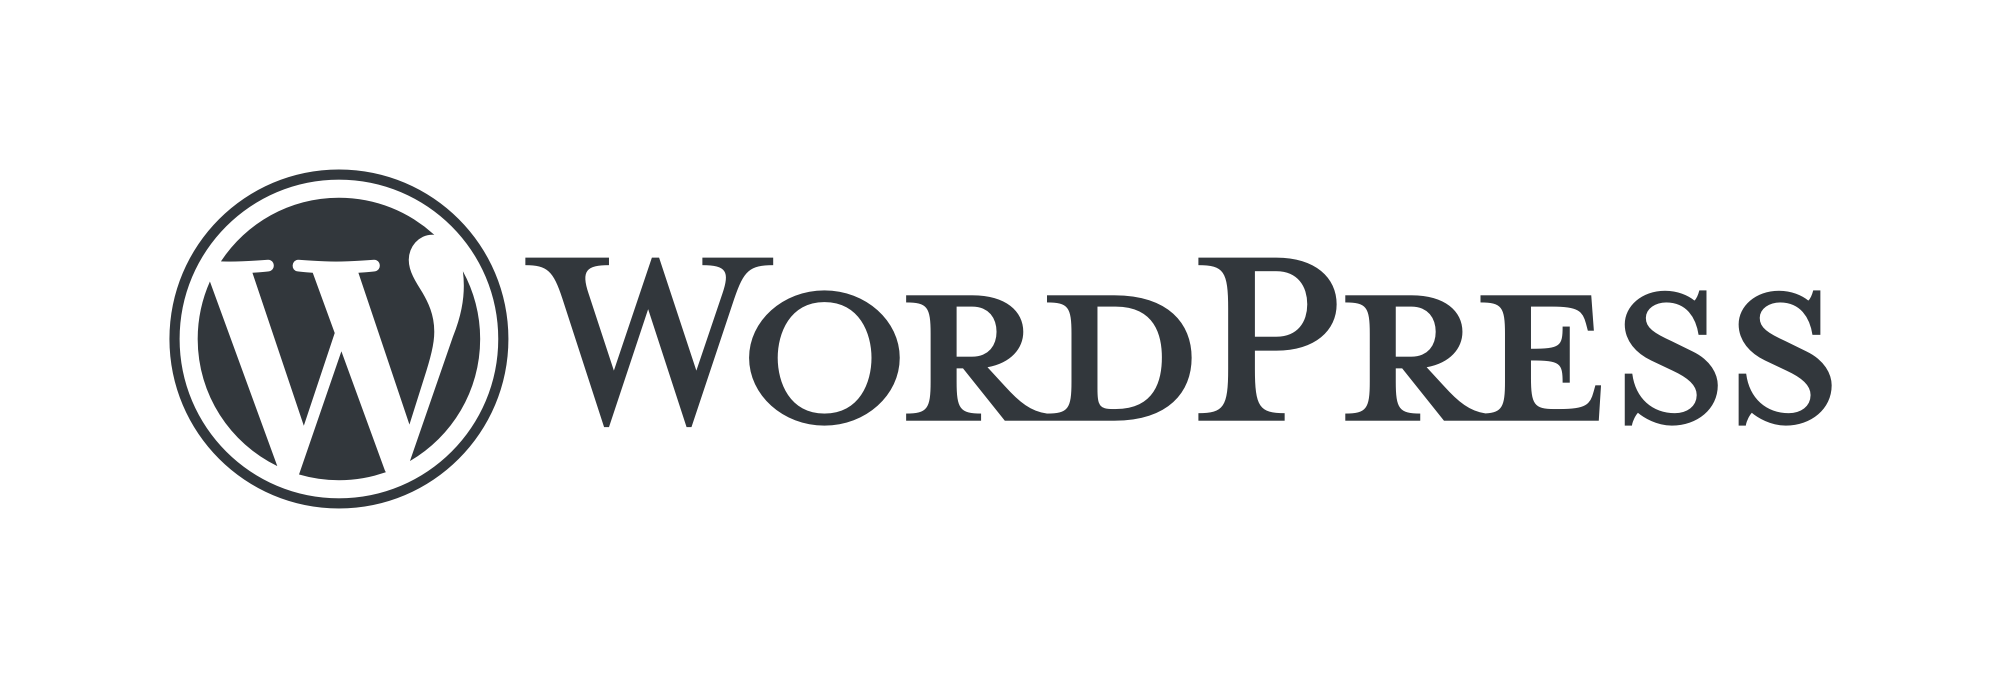 https://stackedsite.com/wp-content/uploads/2020/03/WordPress-logotype-standard.png